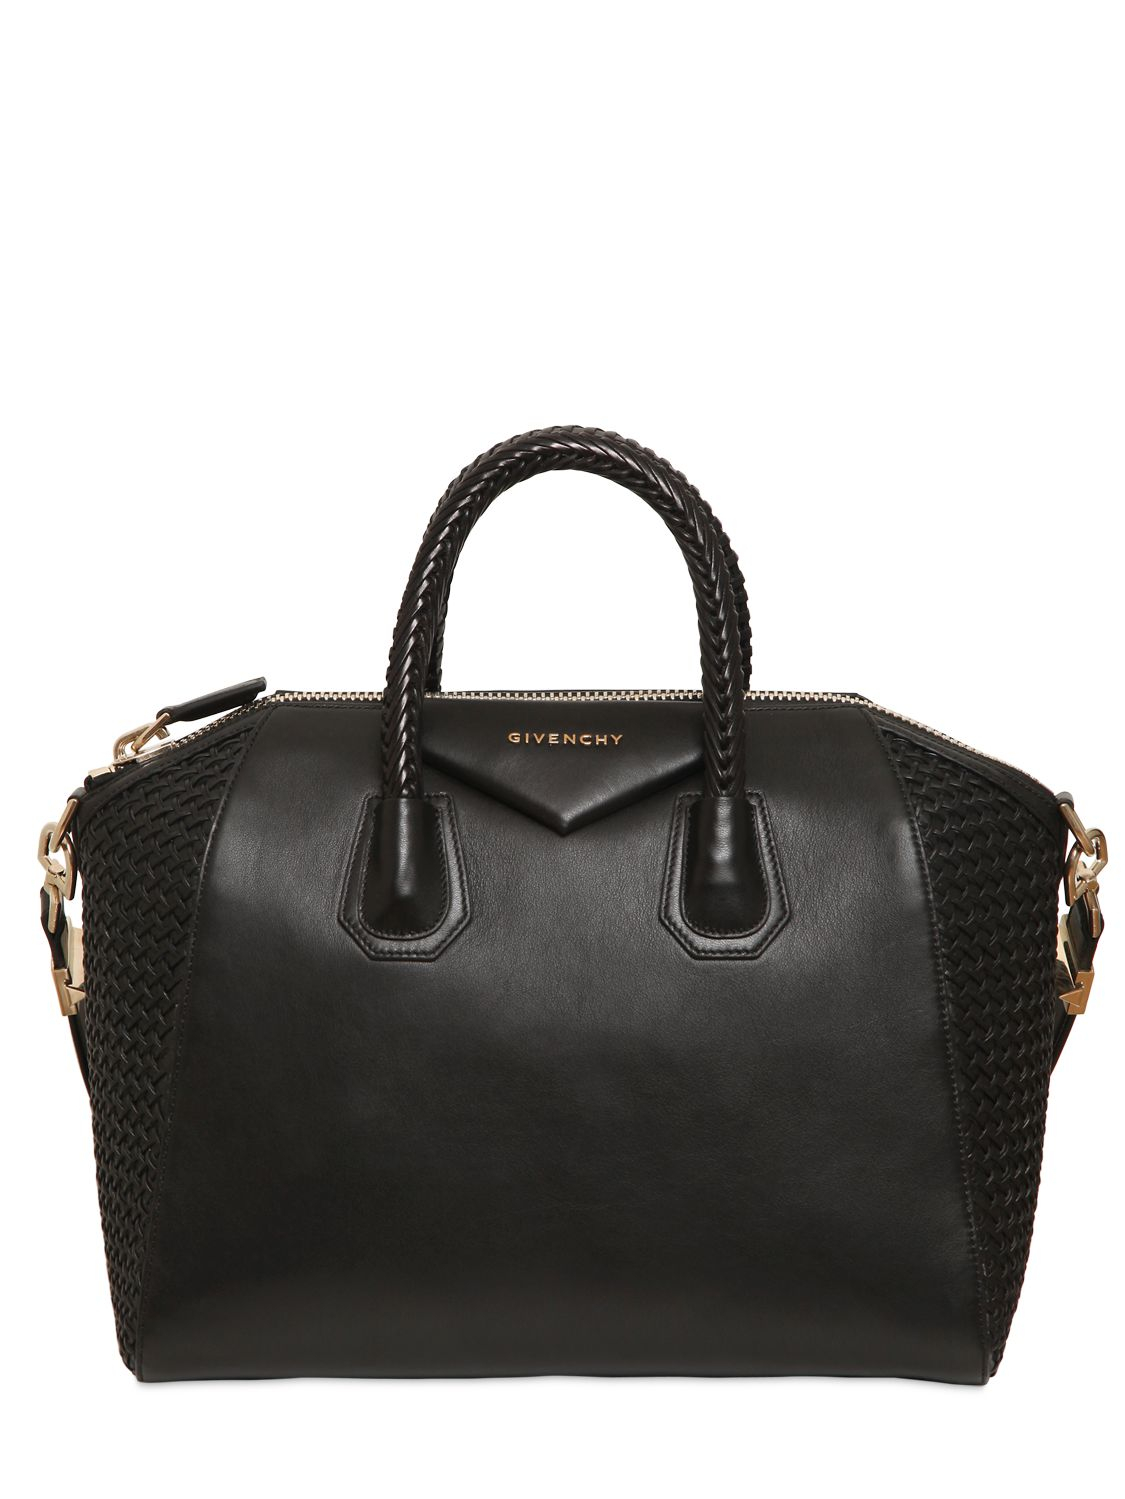 Givenchy Woven Medium Antigona Top Handle Bag in Black | Lyst